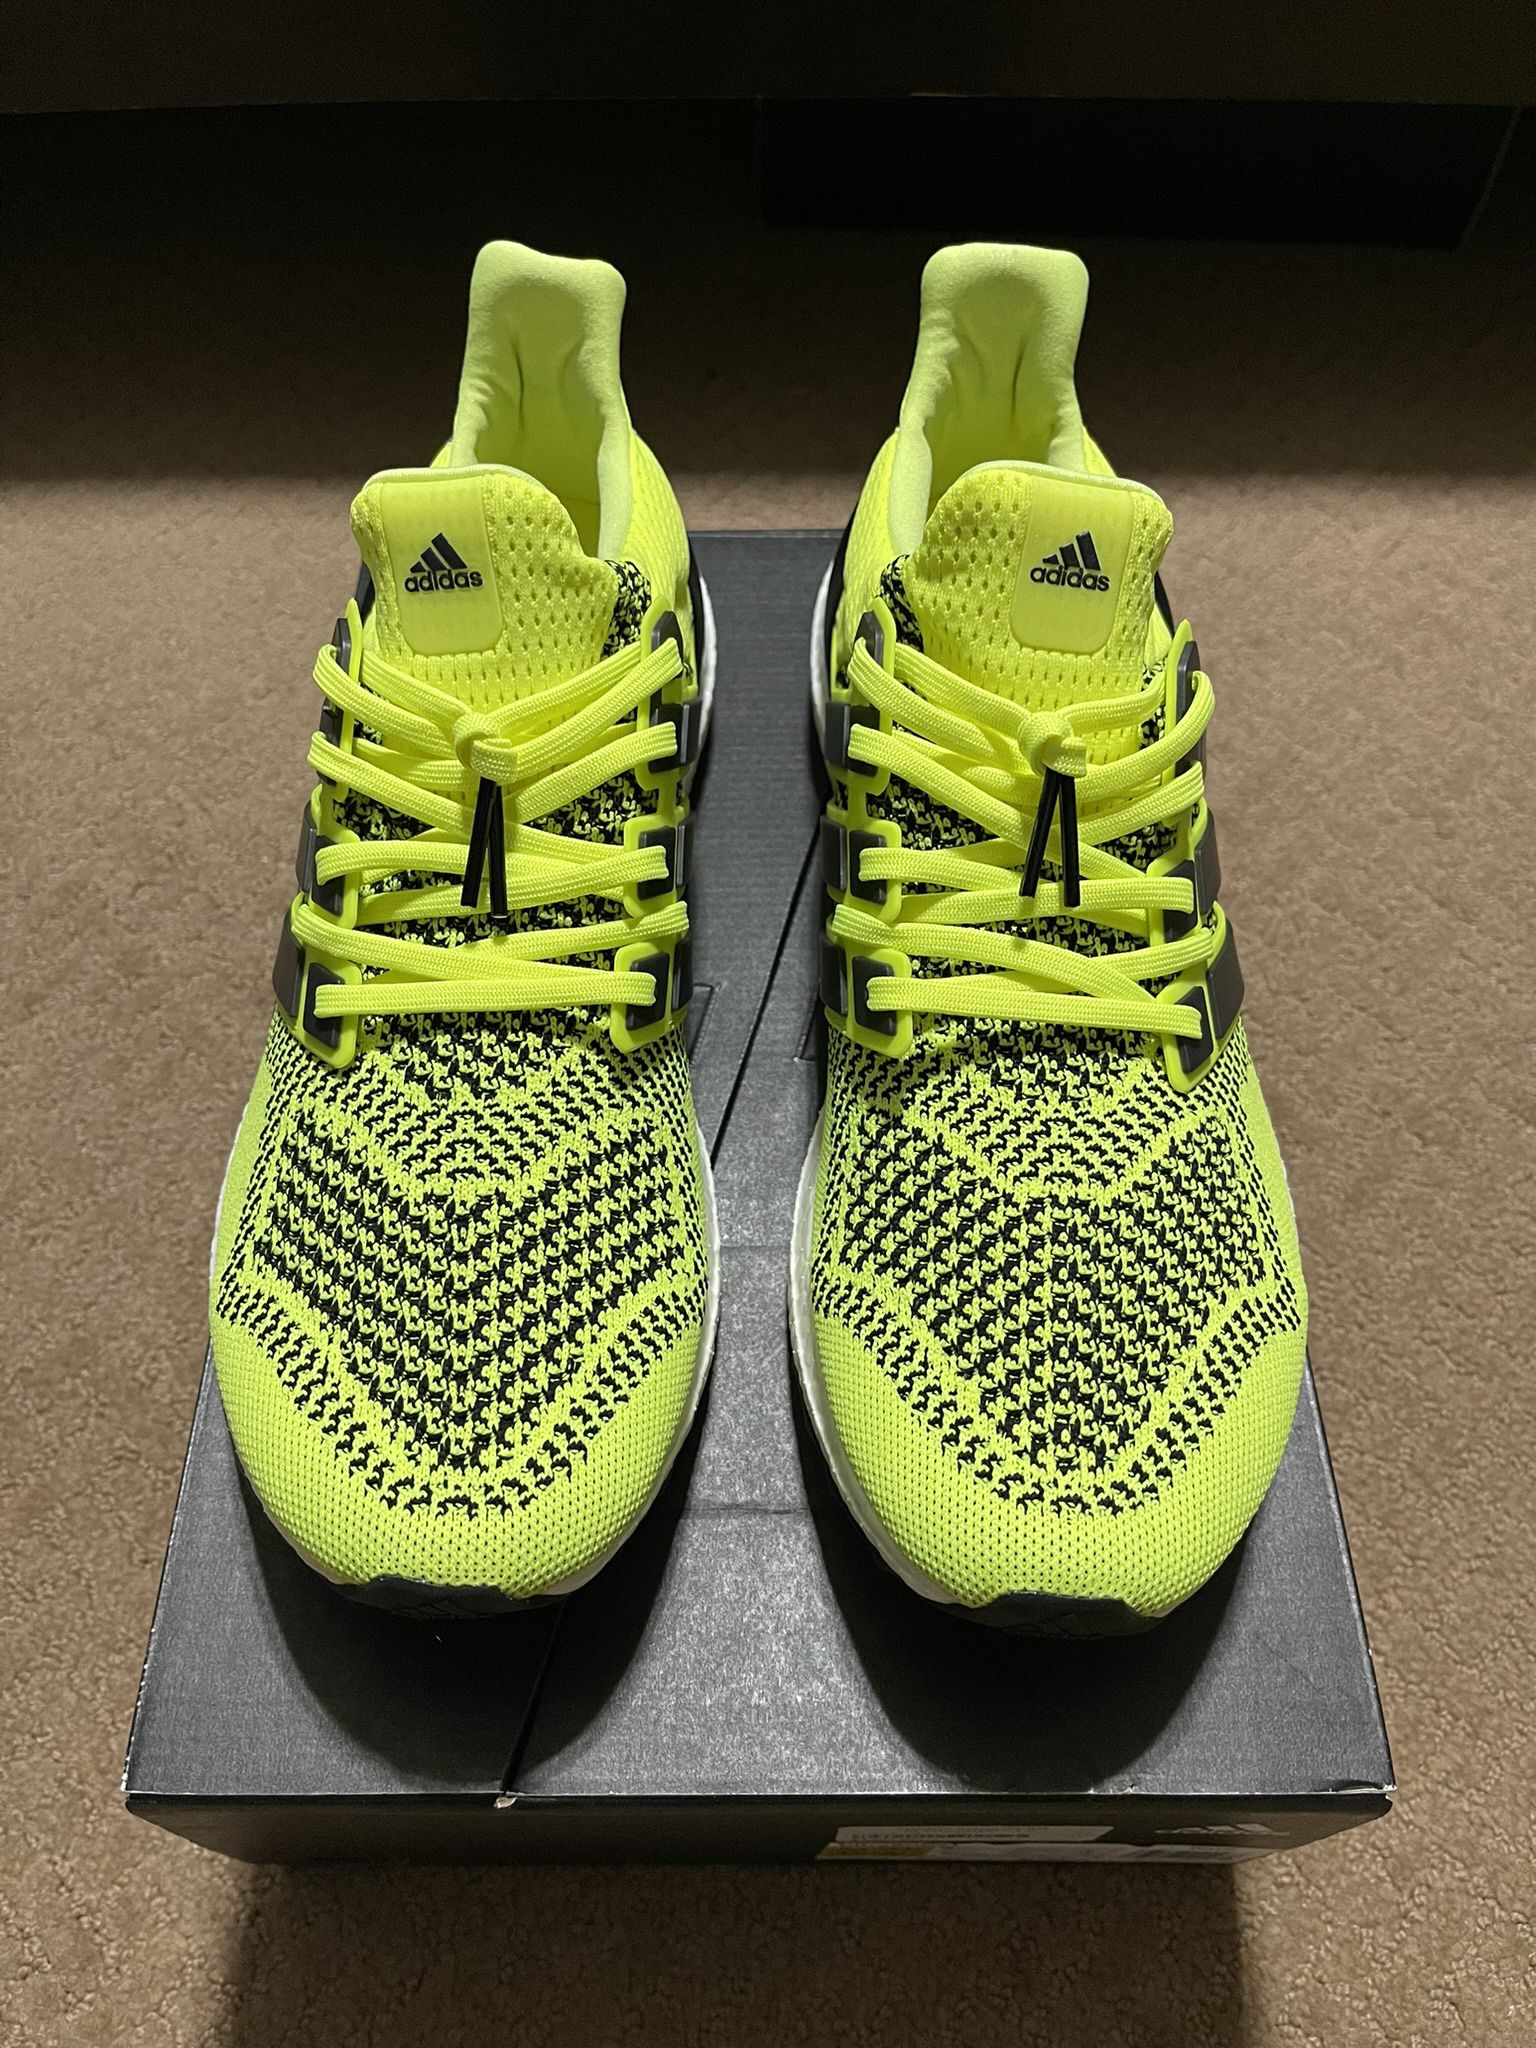 Adidas Ultra Boost 1.0 Solar Yellow (2019) size 12